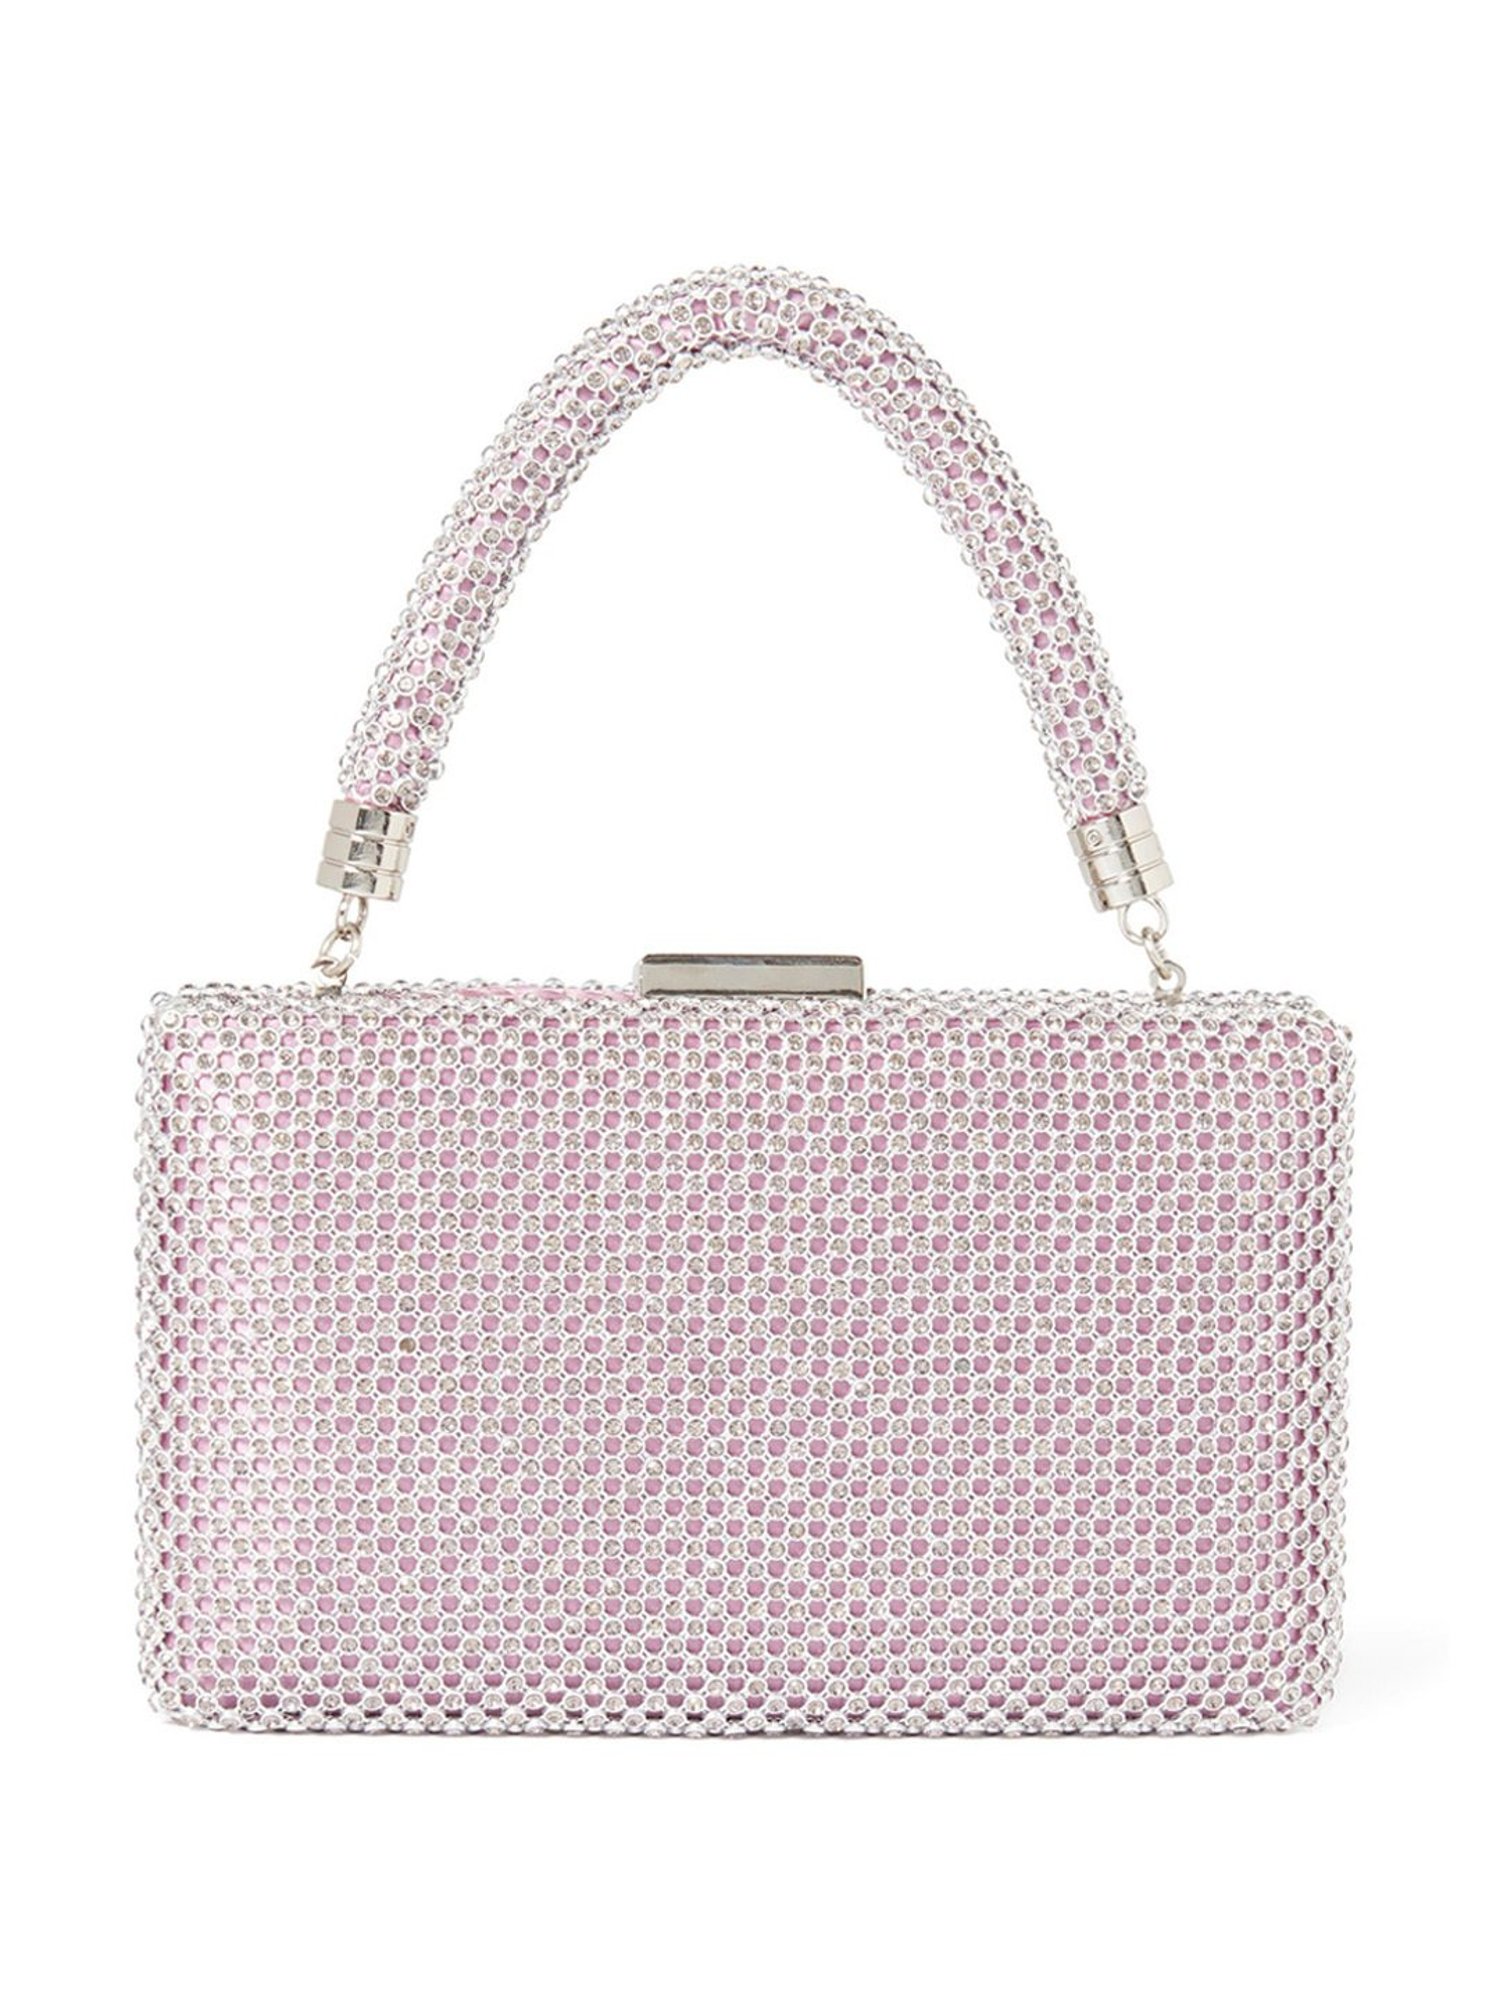 ESBEDA Handbags : Buy ESBEDA Purple Color Glitter Shine Box Clutch